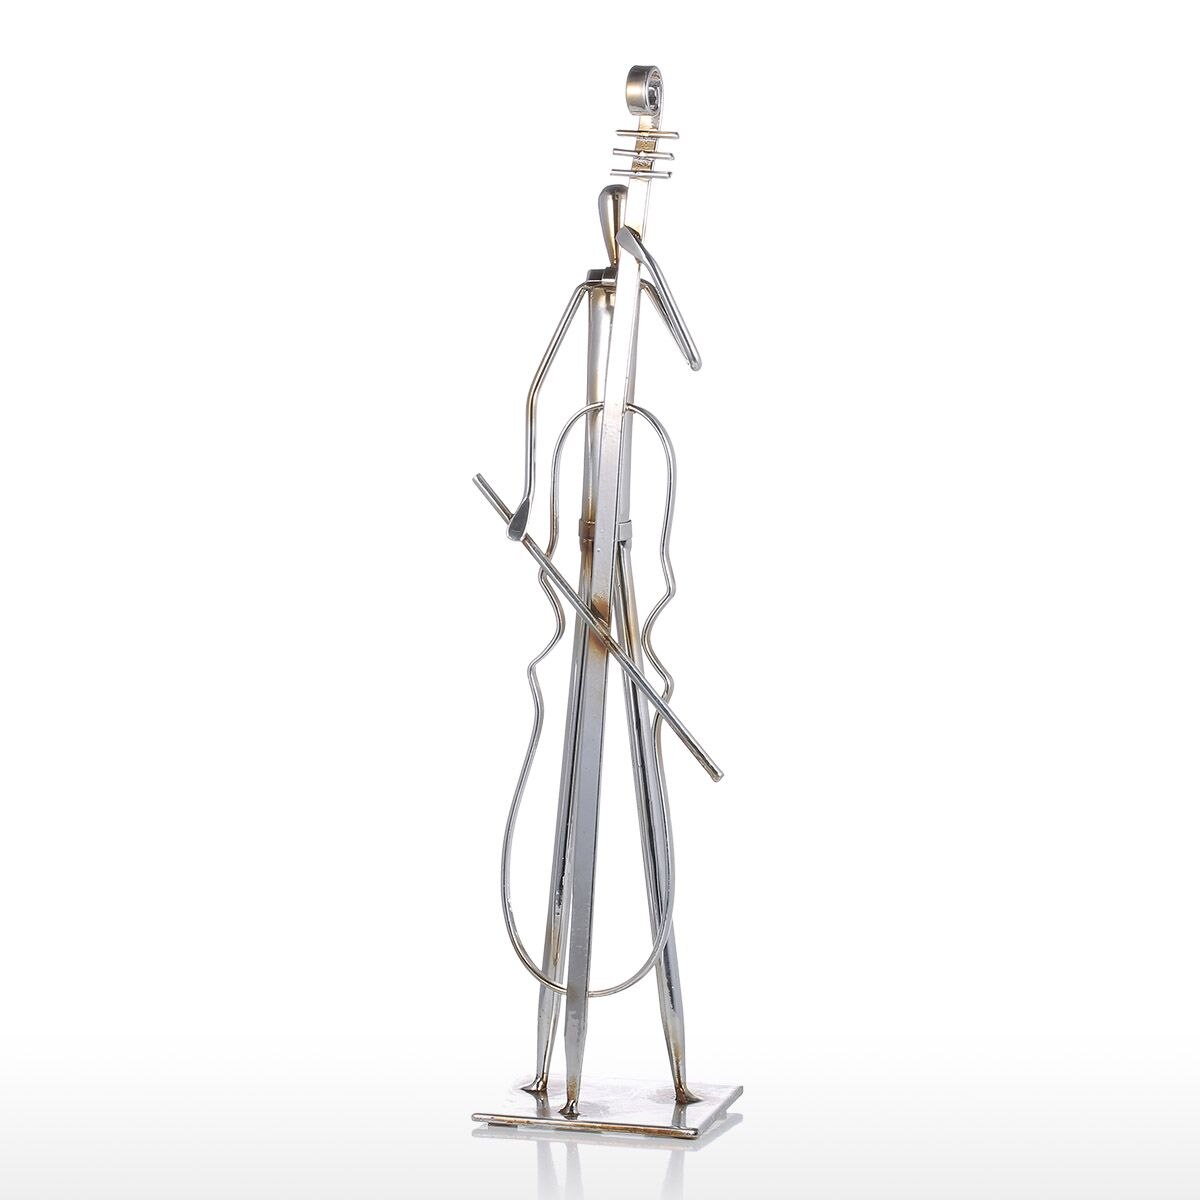 Tooarts Metal Sculpture Orchestra Cello Iron Sculpture Abstract Sculpture Modern Sculpture Band Instrument Home Ornament: Default Title